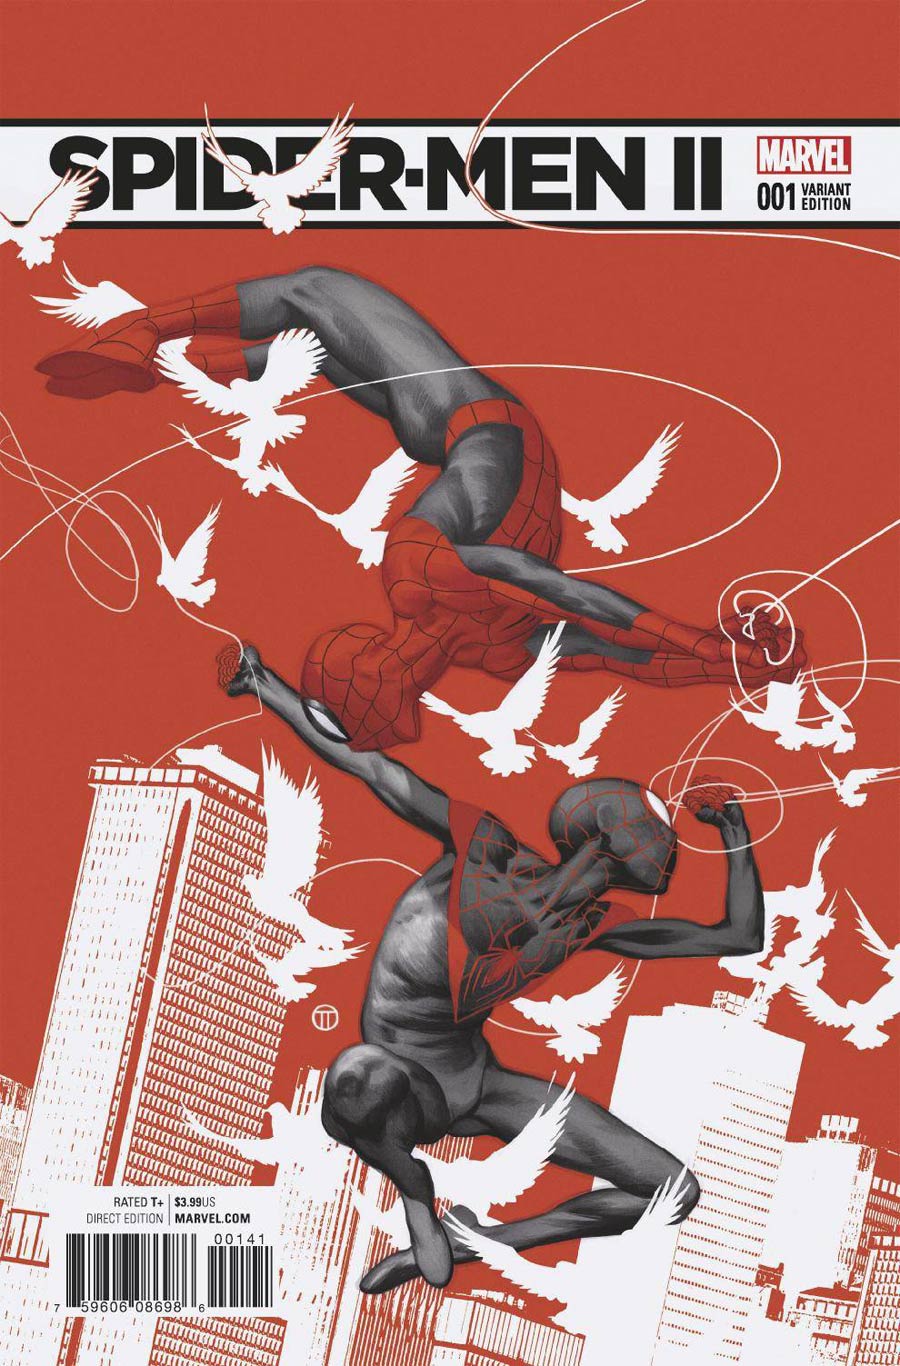 Spider-Men II #1 Cover F Incentive Julian Totino Tedesco Variant Cover